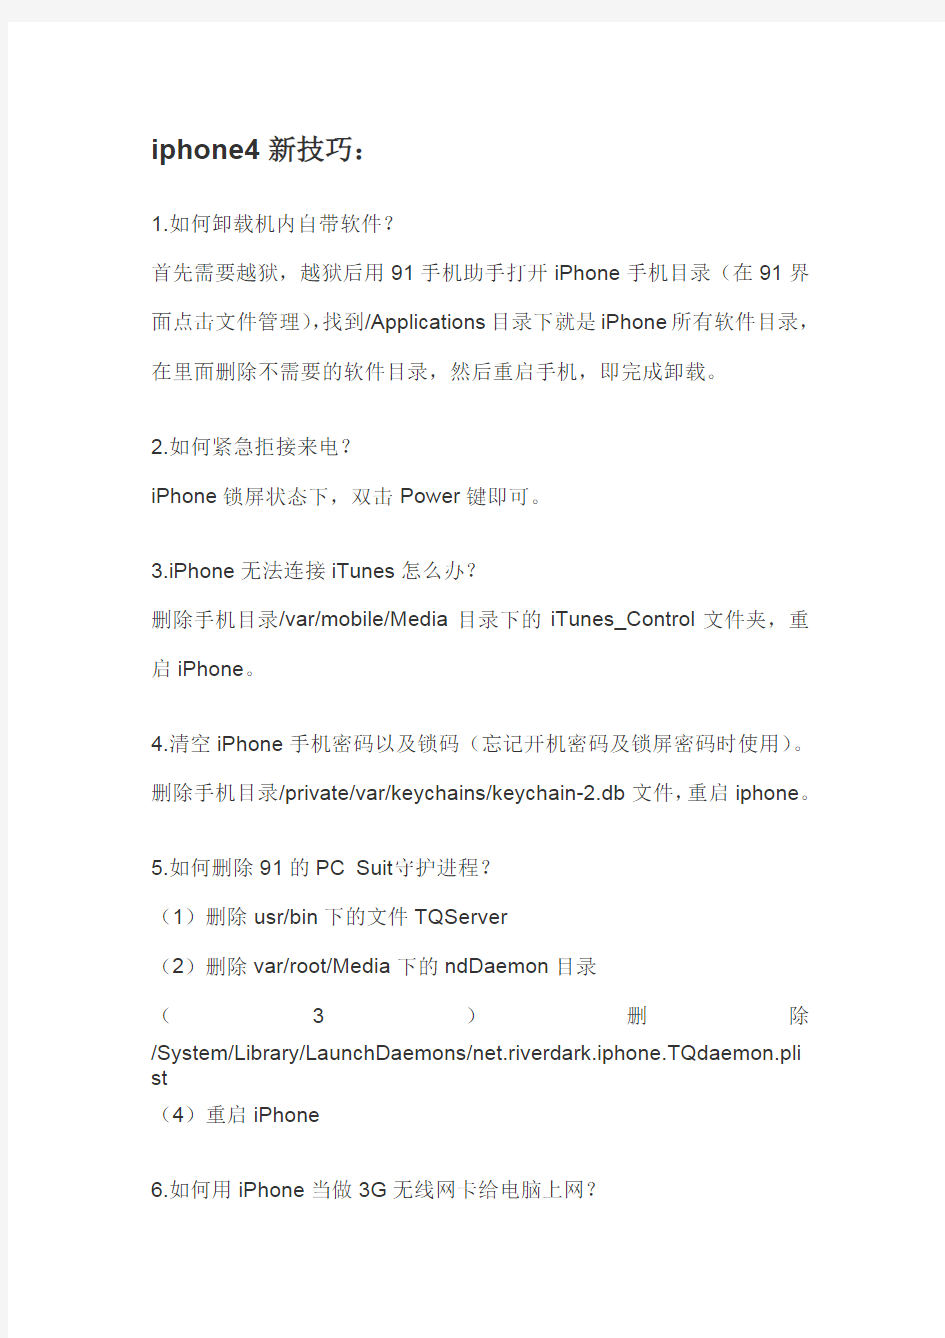 iPhone 4越狱后注意点_包含技巧,存放目录以及优化_整理汇总